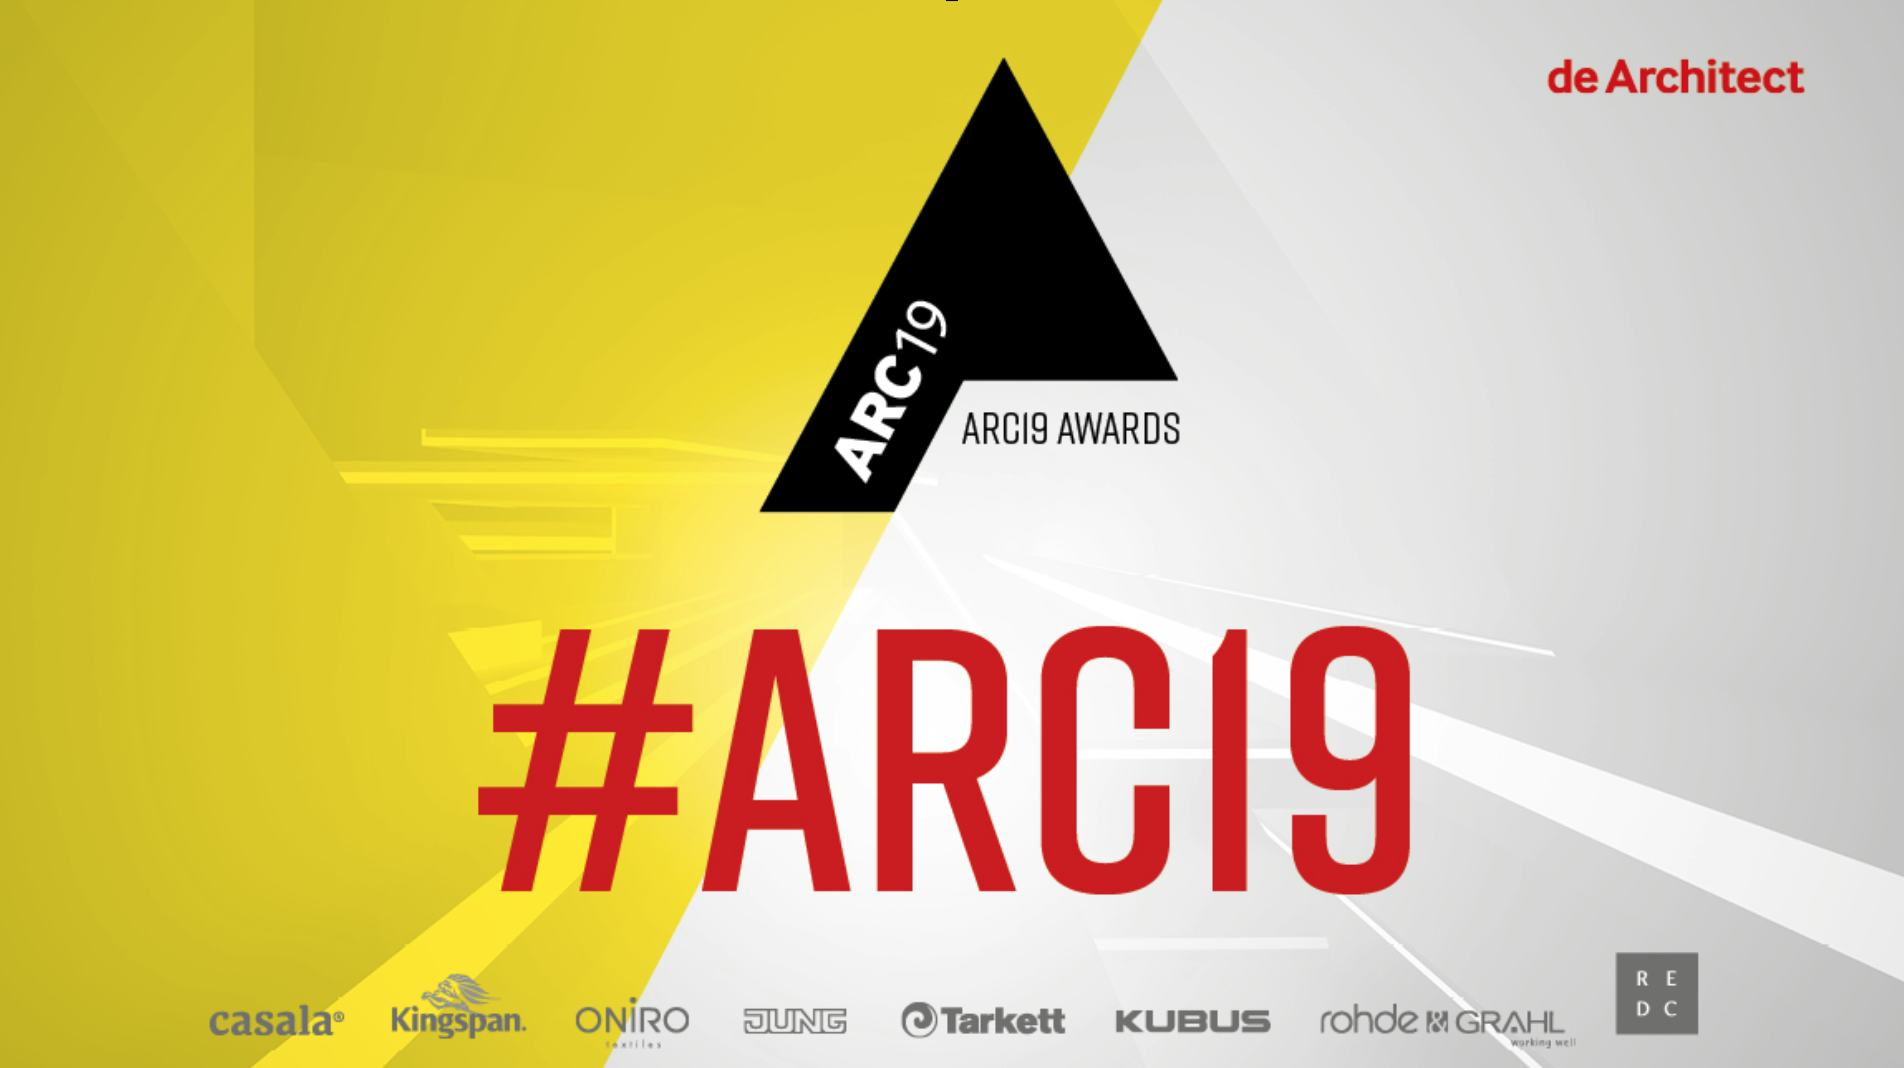 Blog: Architectuur als feest - Terugblik op uitreiking ARC19 Awards